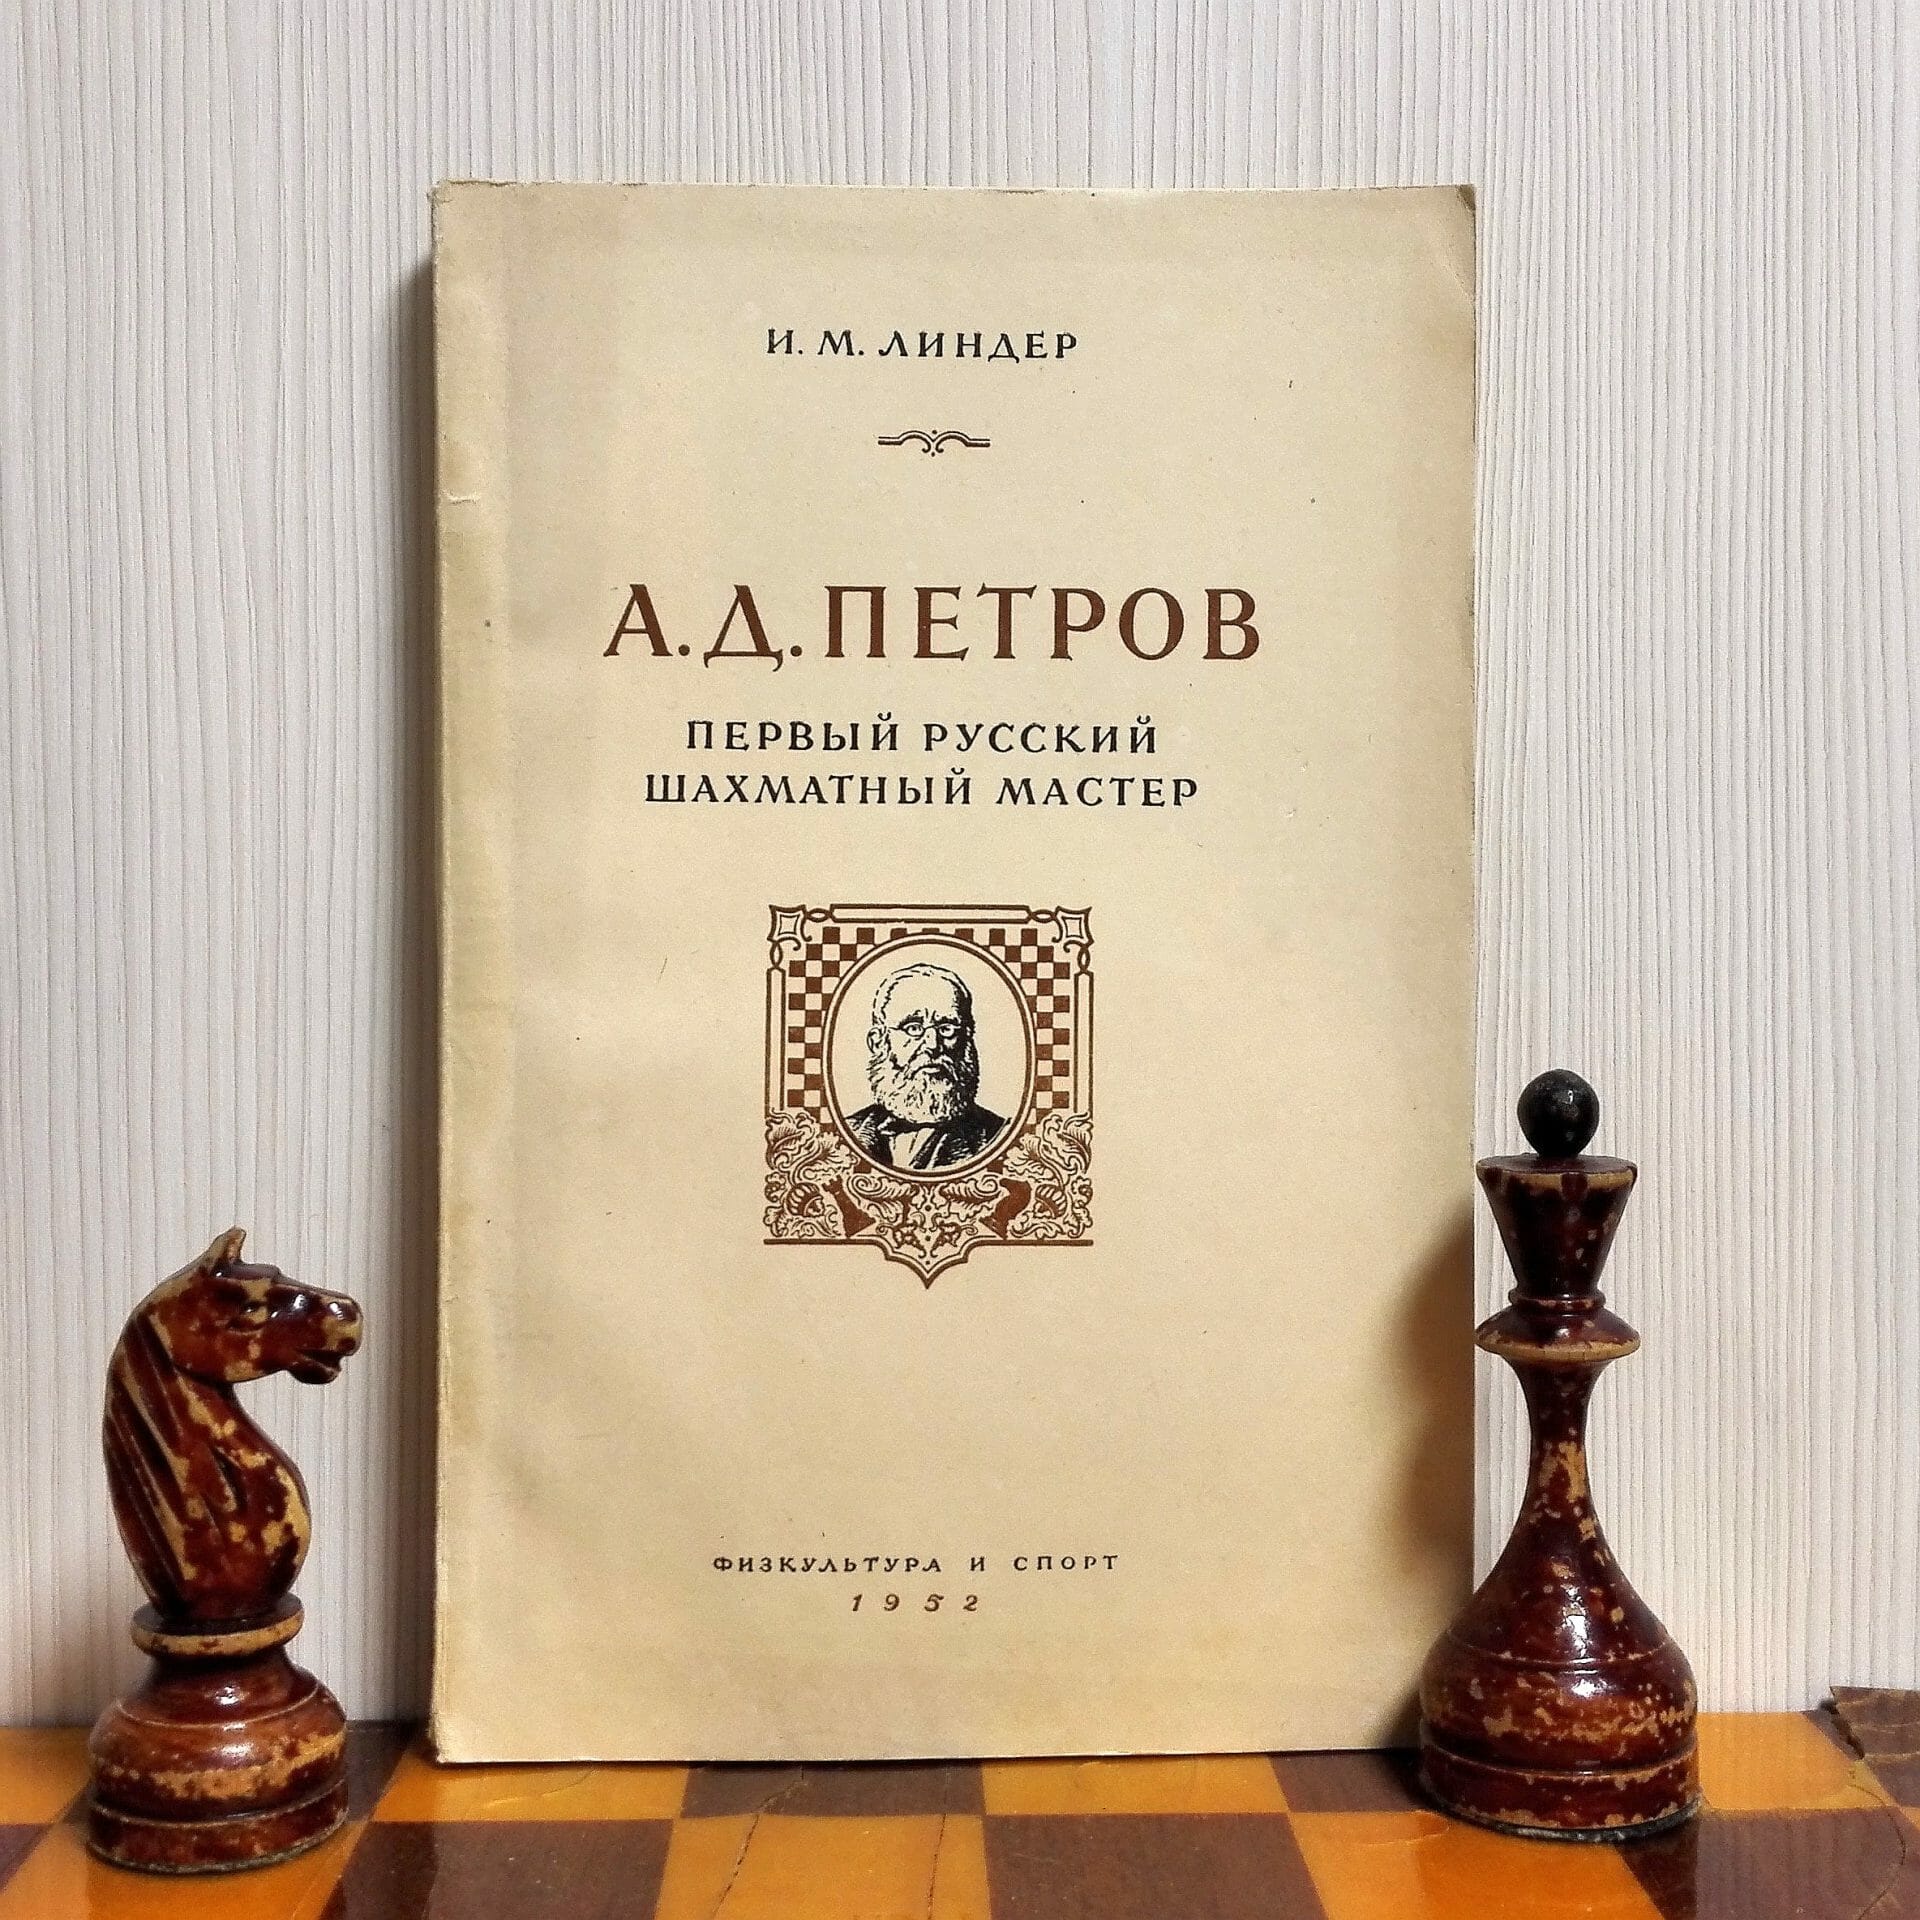 petrov chess master